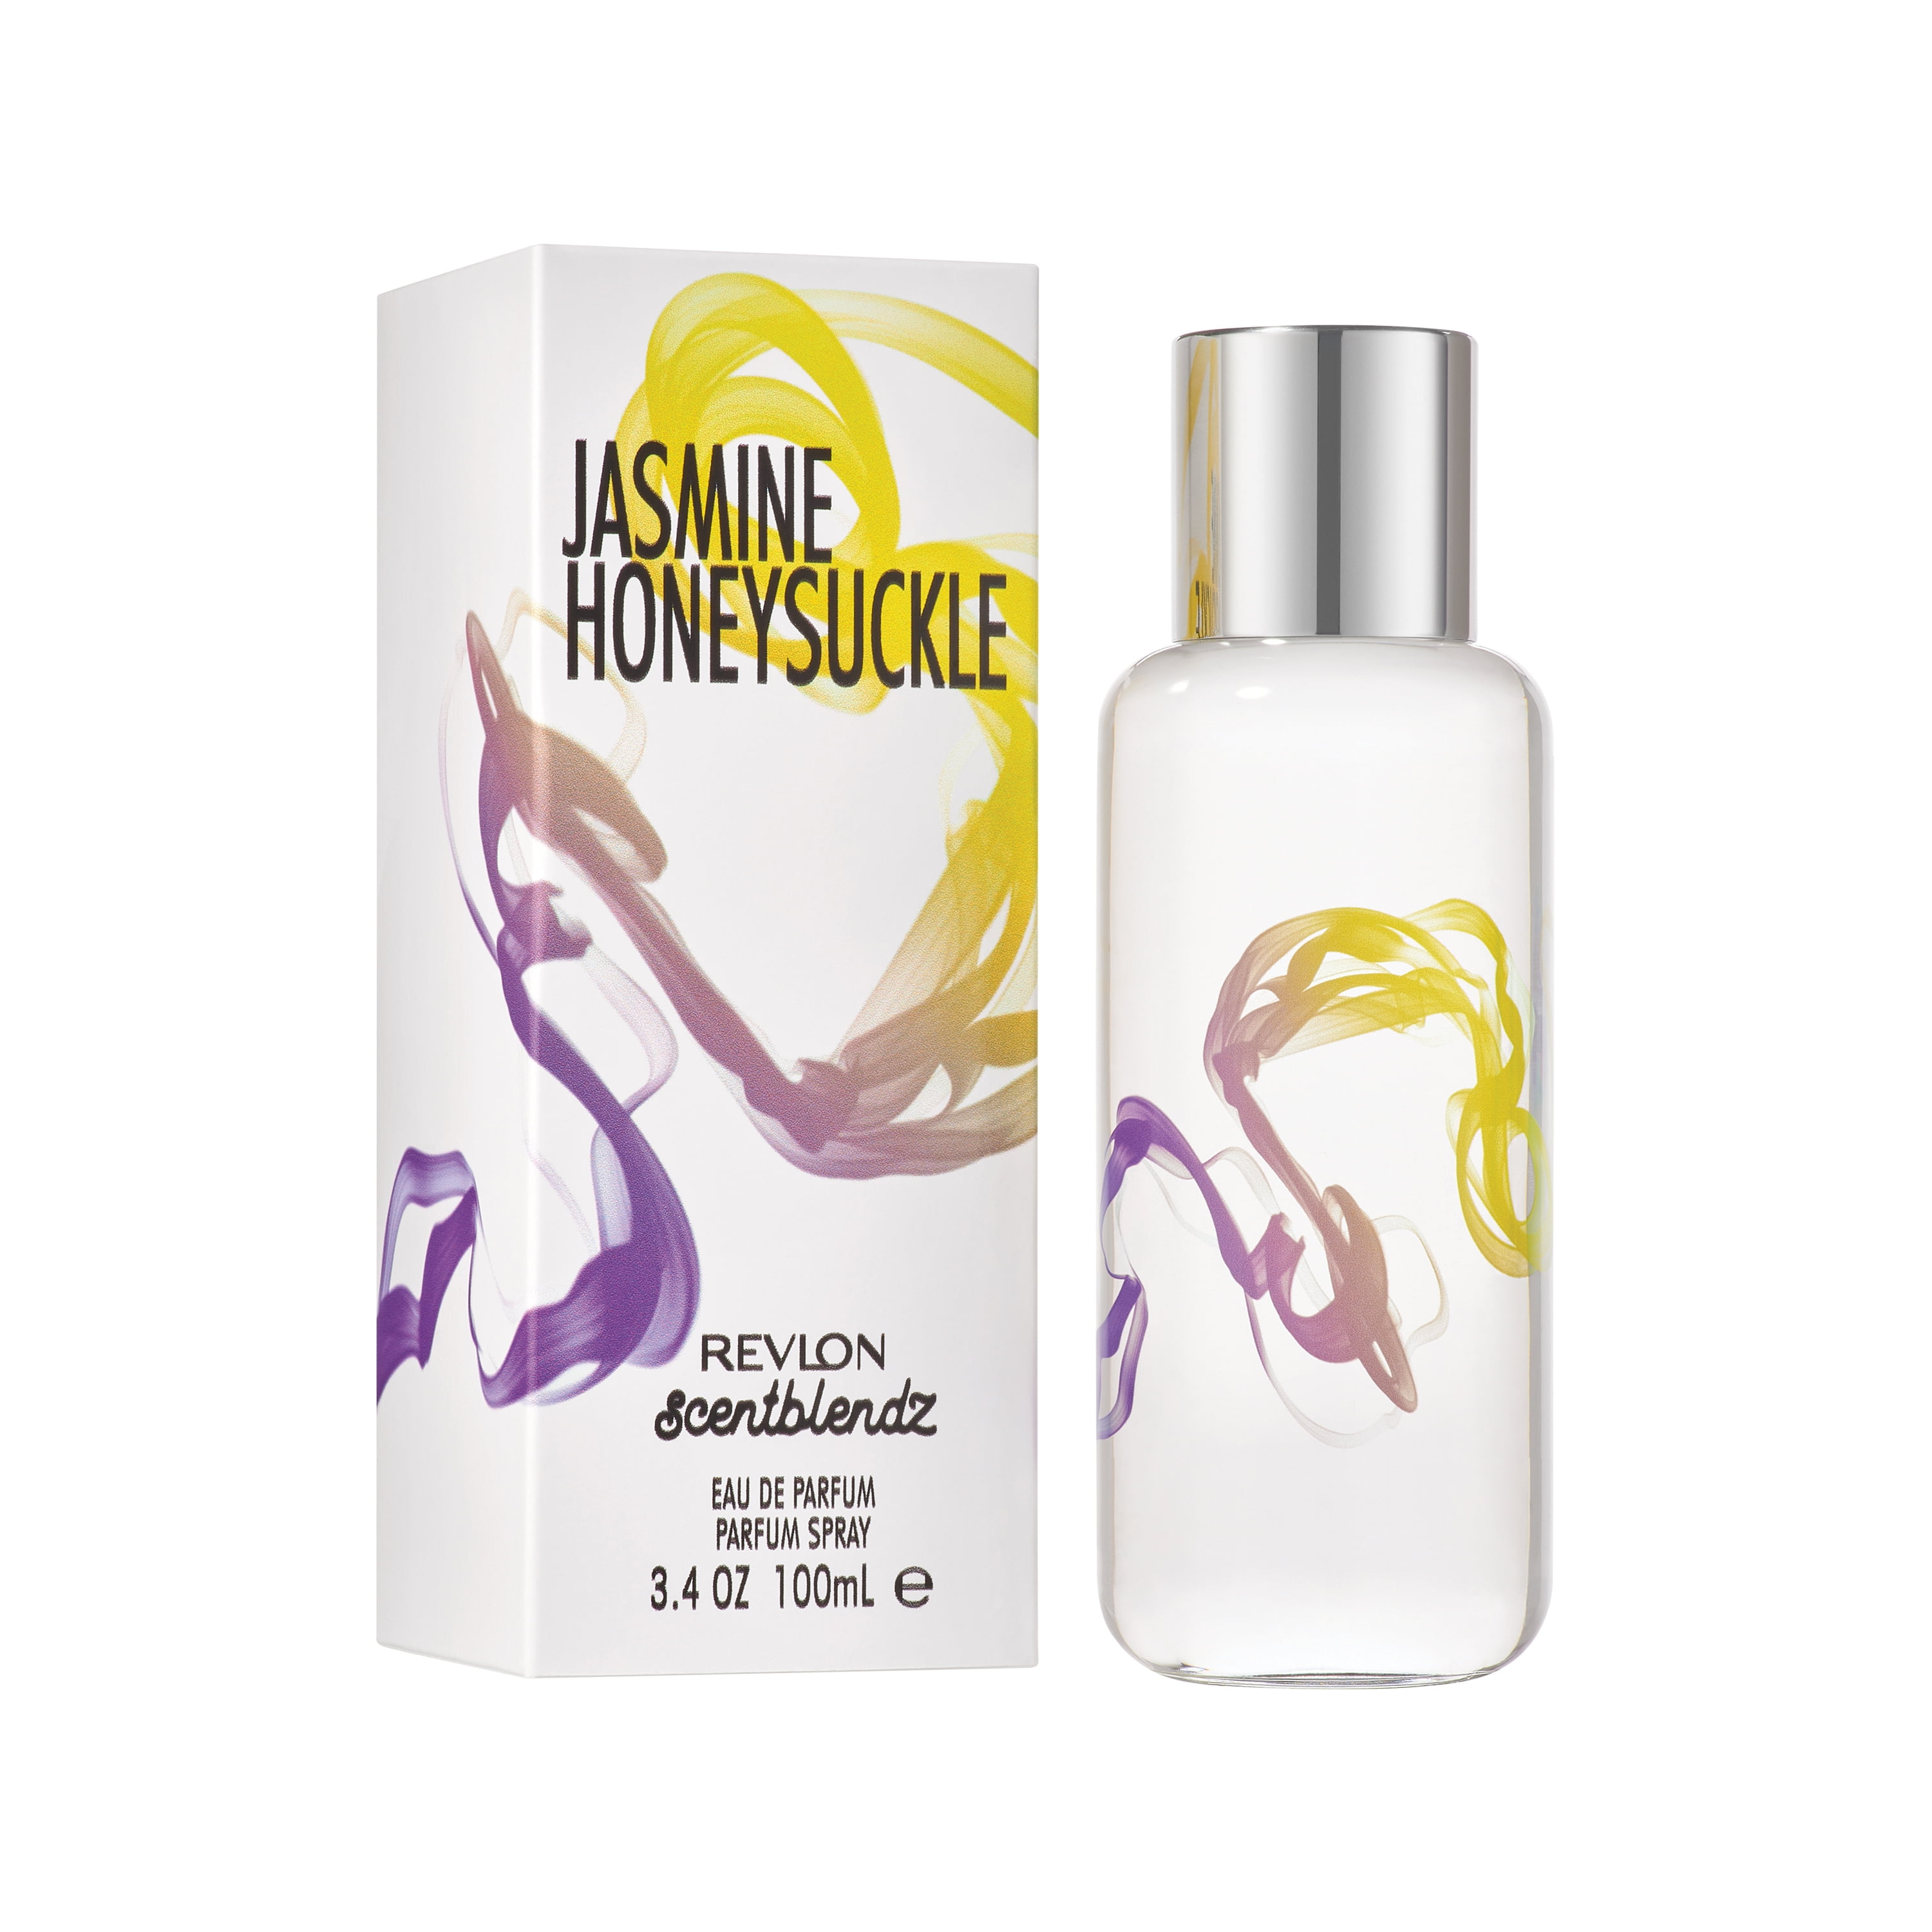 Revlon Scentblendz, Jasmine Honeysuckle Eau de Parfum, Artisanal Fragrance Spray, Perfume for Women, 3.4 fl. Oz